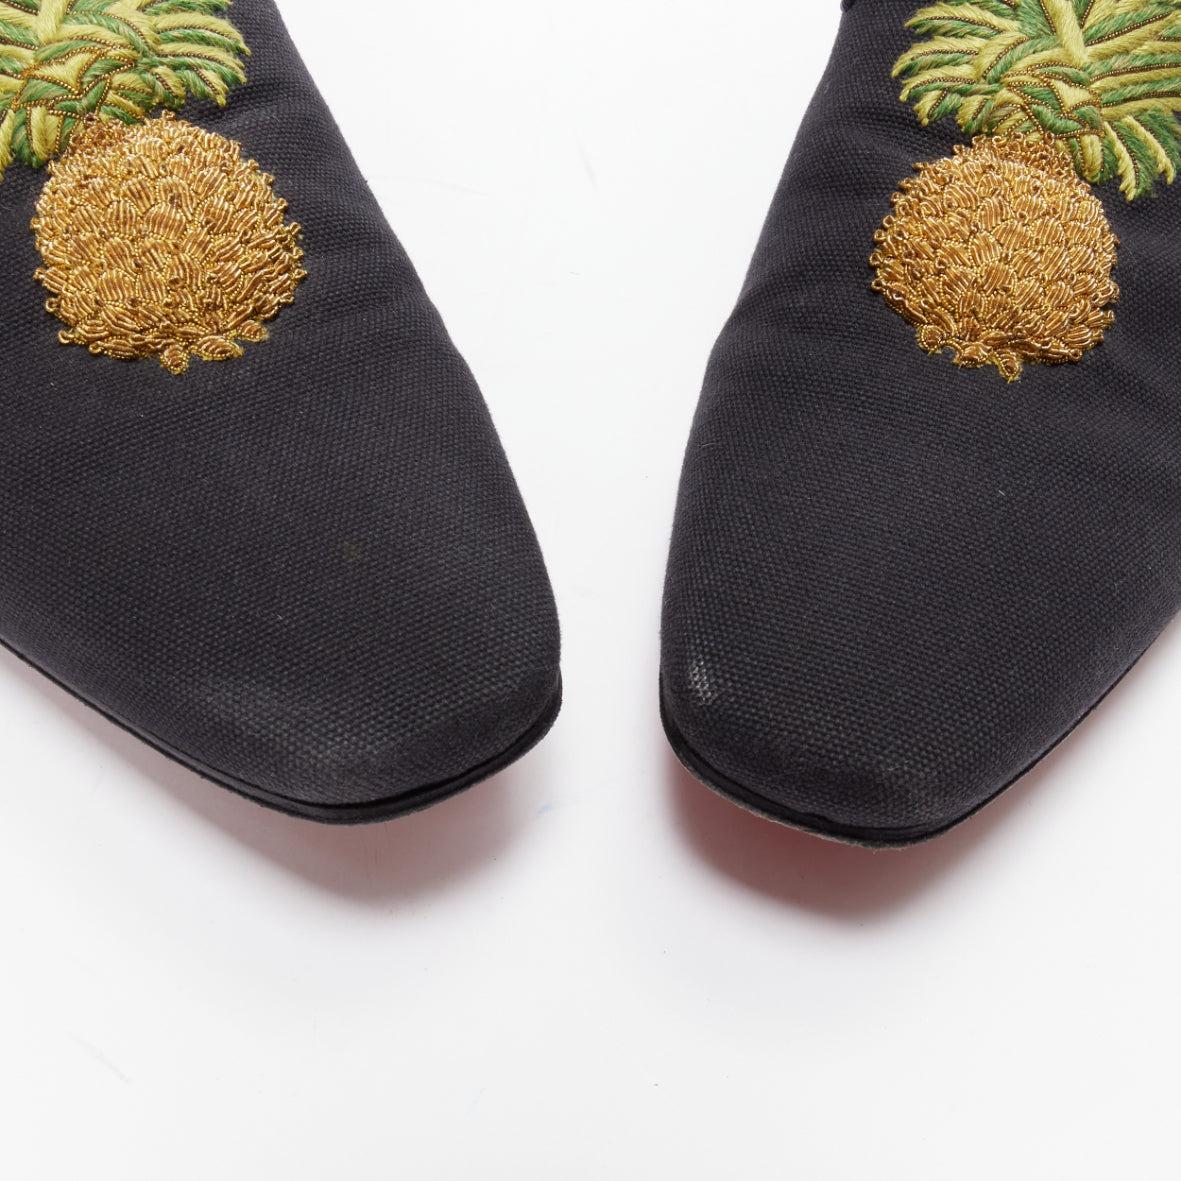 CHRISTIAN LOUBOUTIN Dadanas gold pineapple fabric loafers dress shoes EU42 4